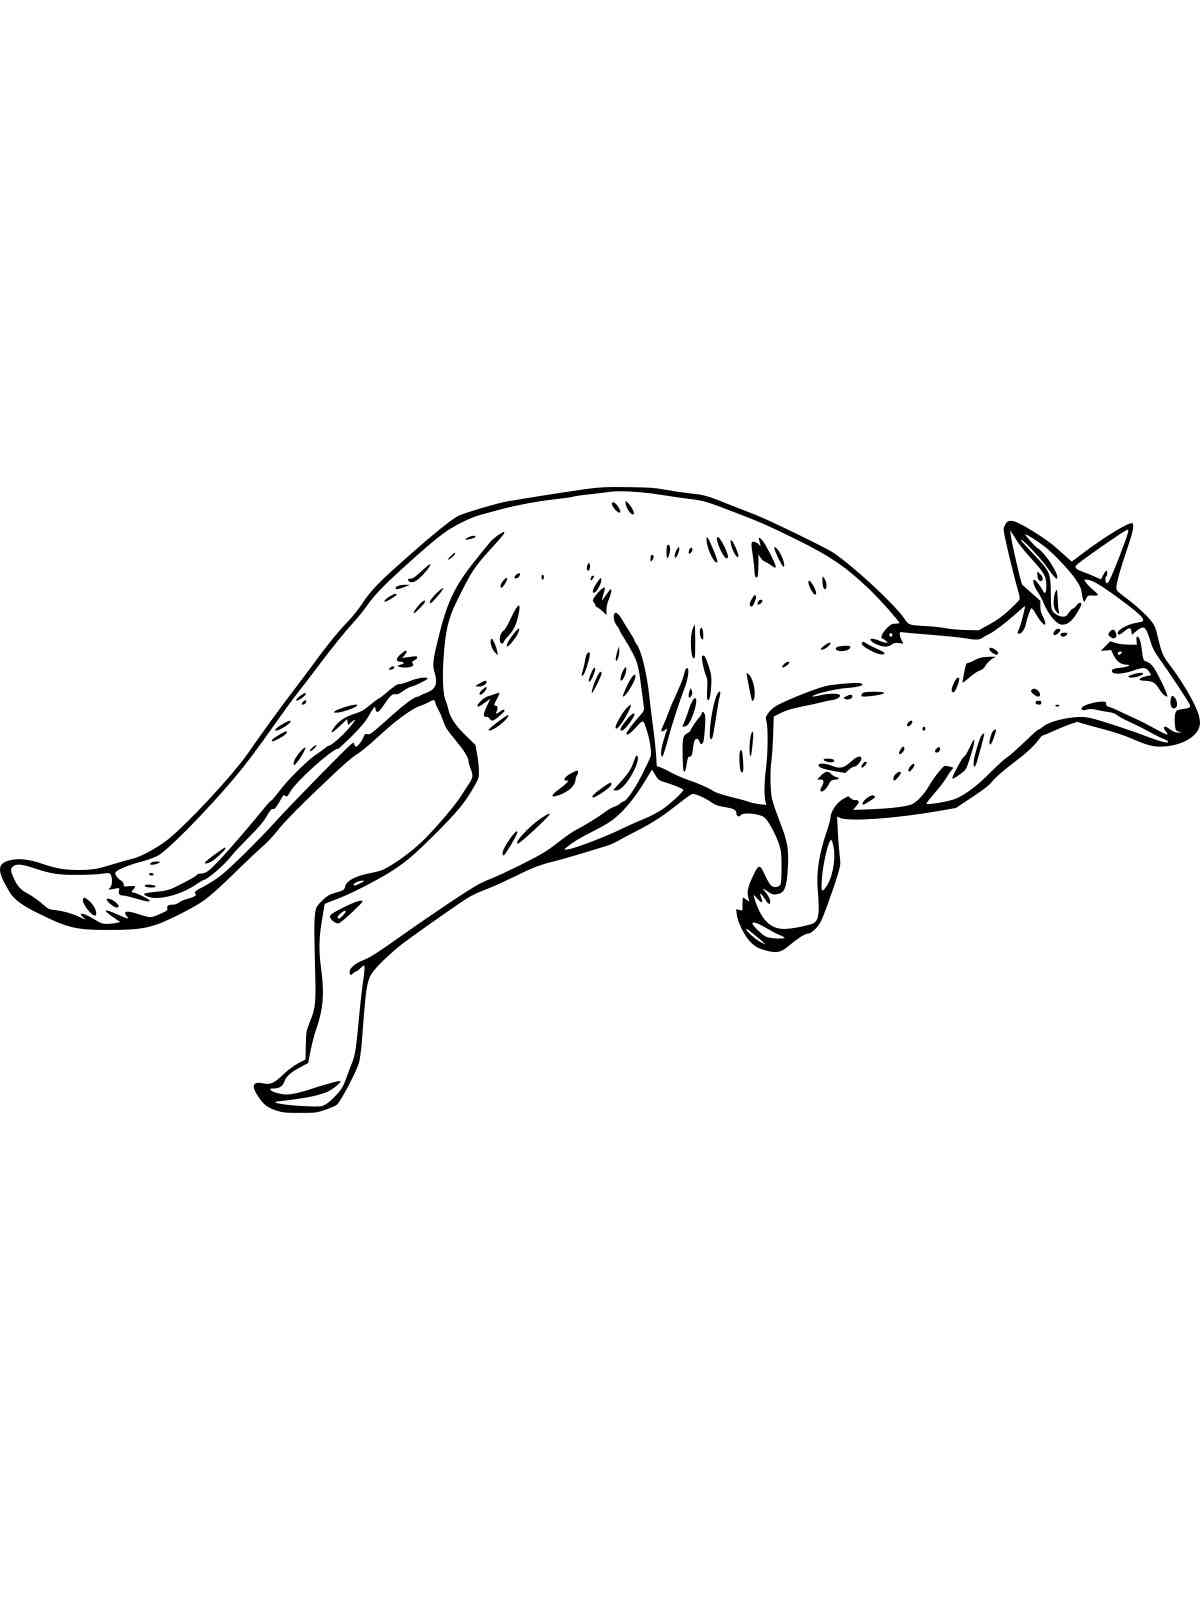 Jumping Wallaby coloring page